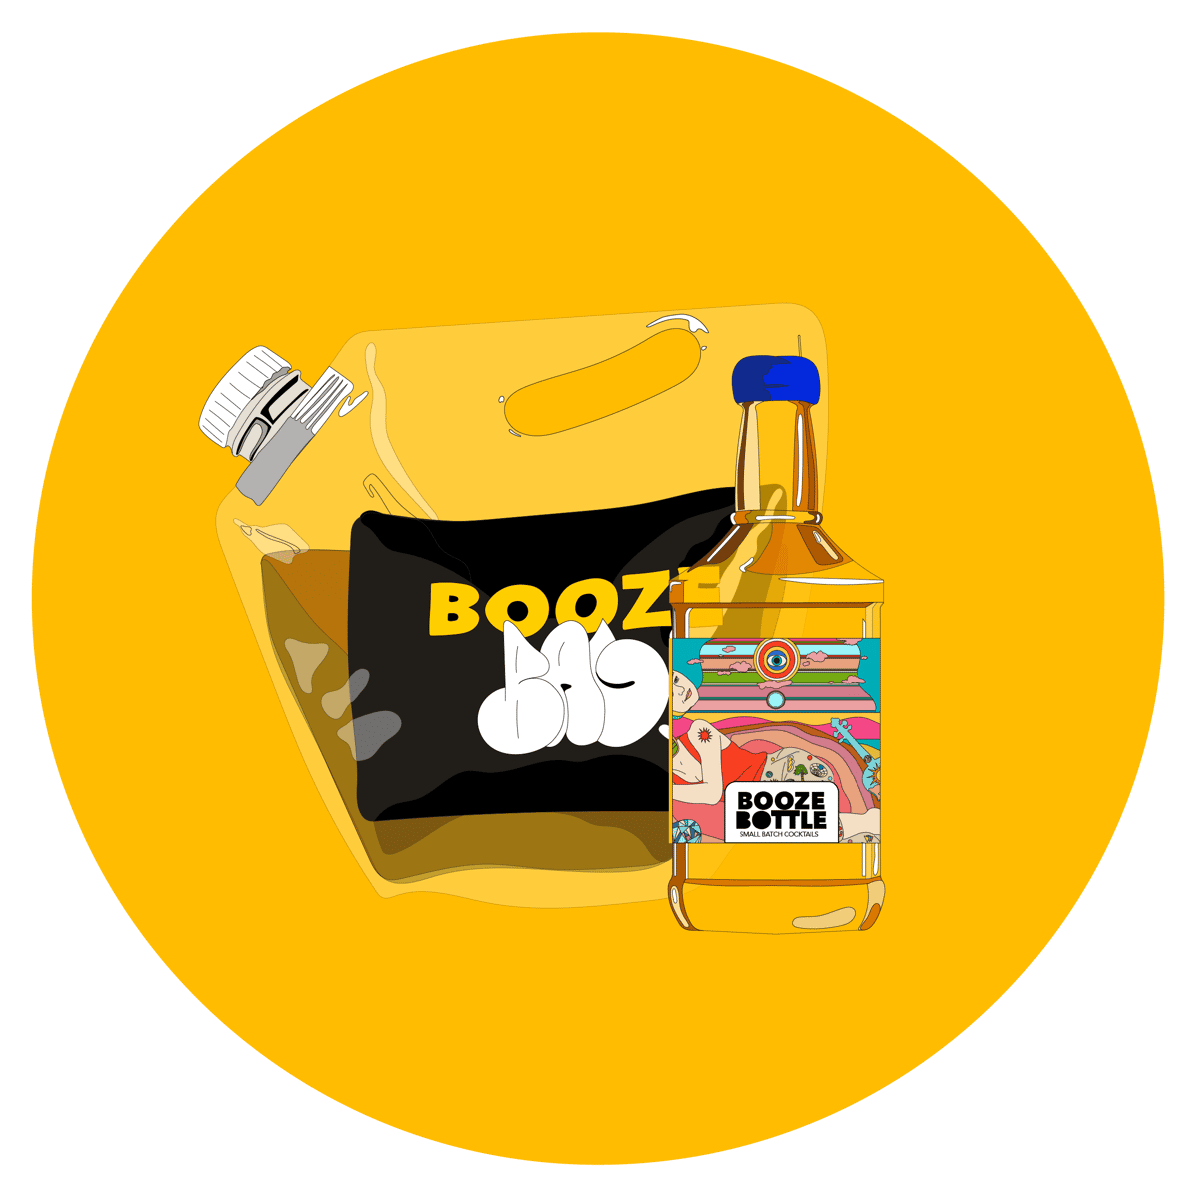 Booze Bag & Booze Bottle Bulk Cocktail Lost & Found OTR